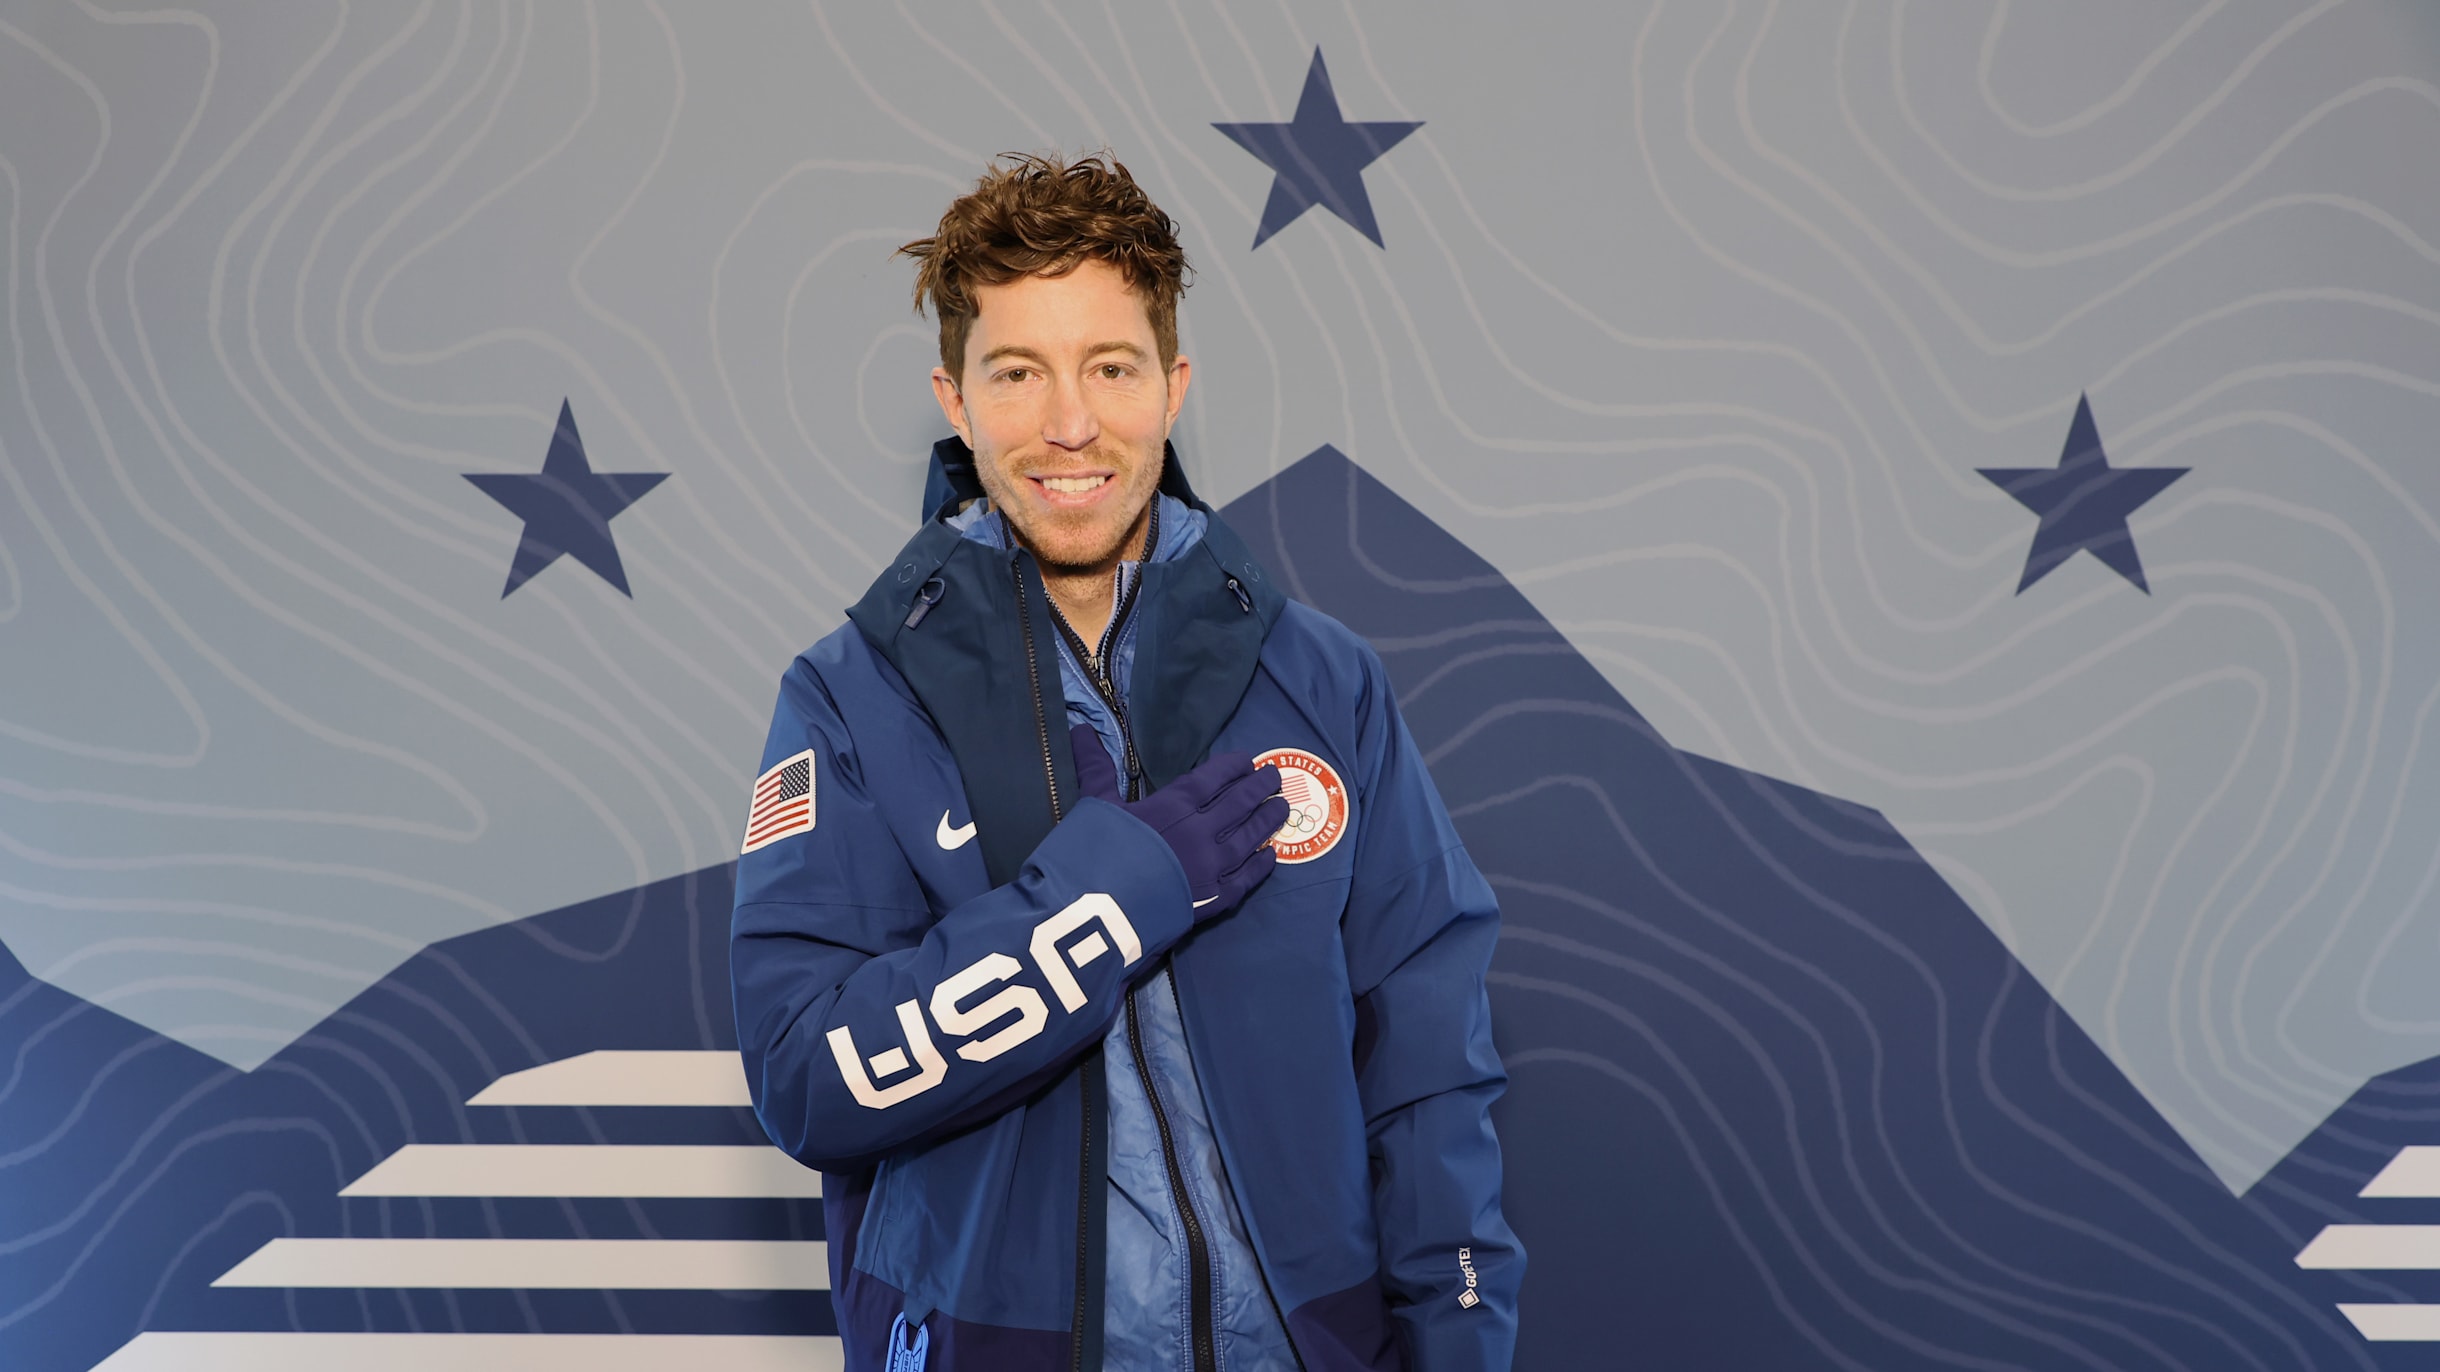 Snowboard star Shaun White's Olympic status still uncertain